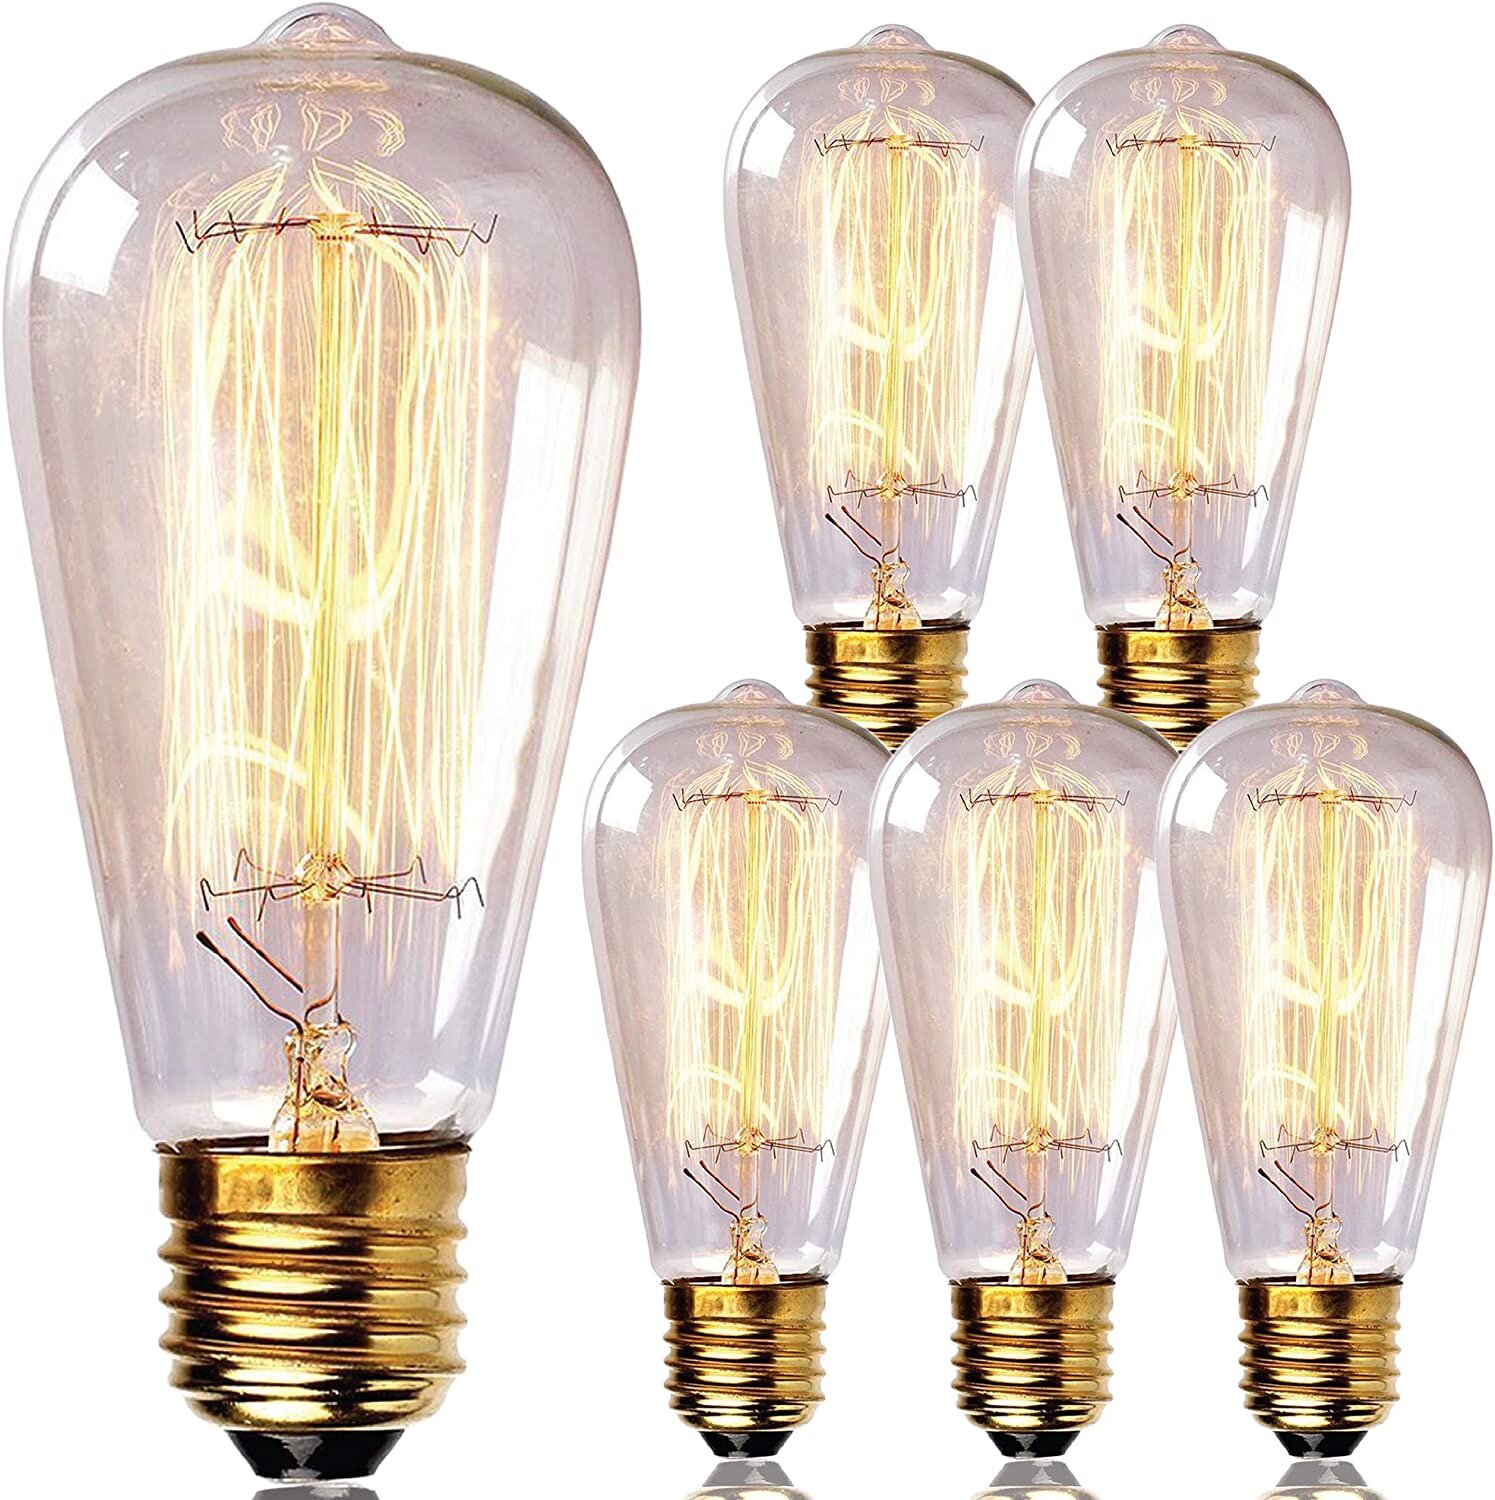 Trio 1170951 07 Crown/Includes 5x G9 28 W Energy-Saving Bulbs Matte Nickel/Alabaster White Glass Finish